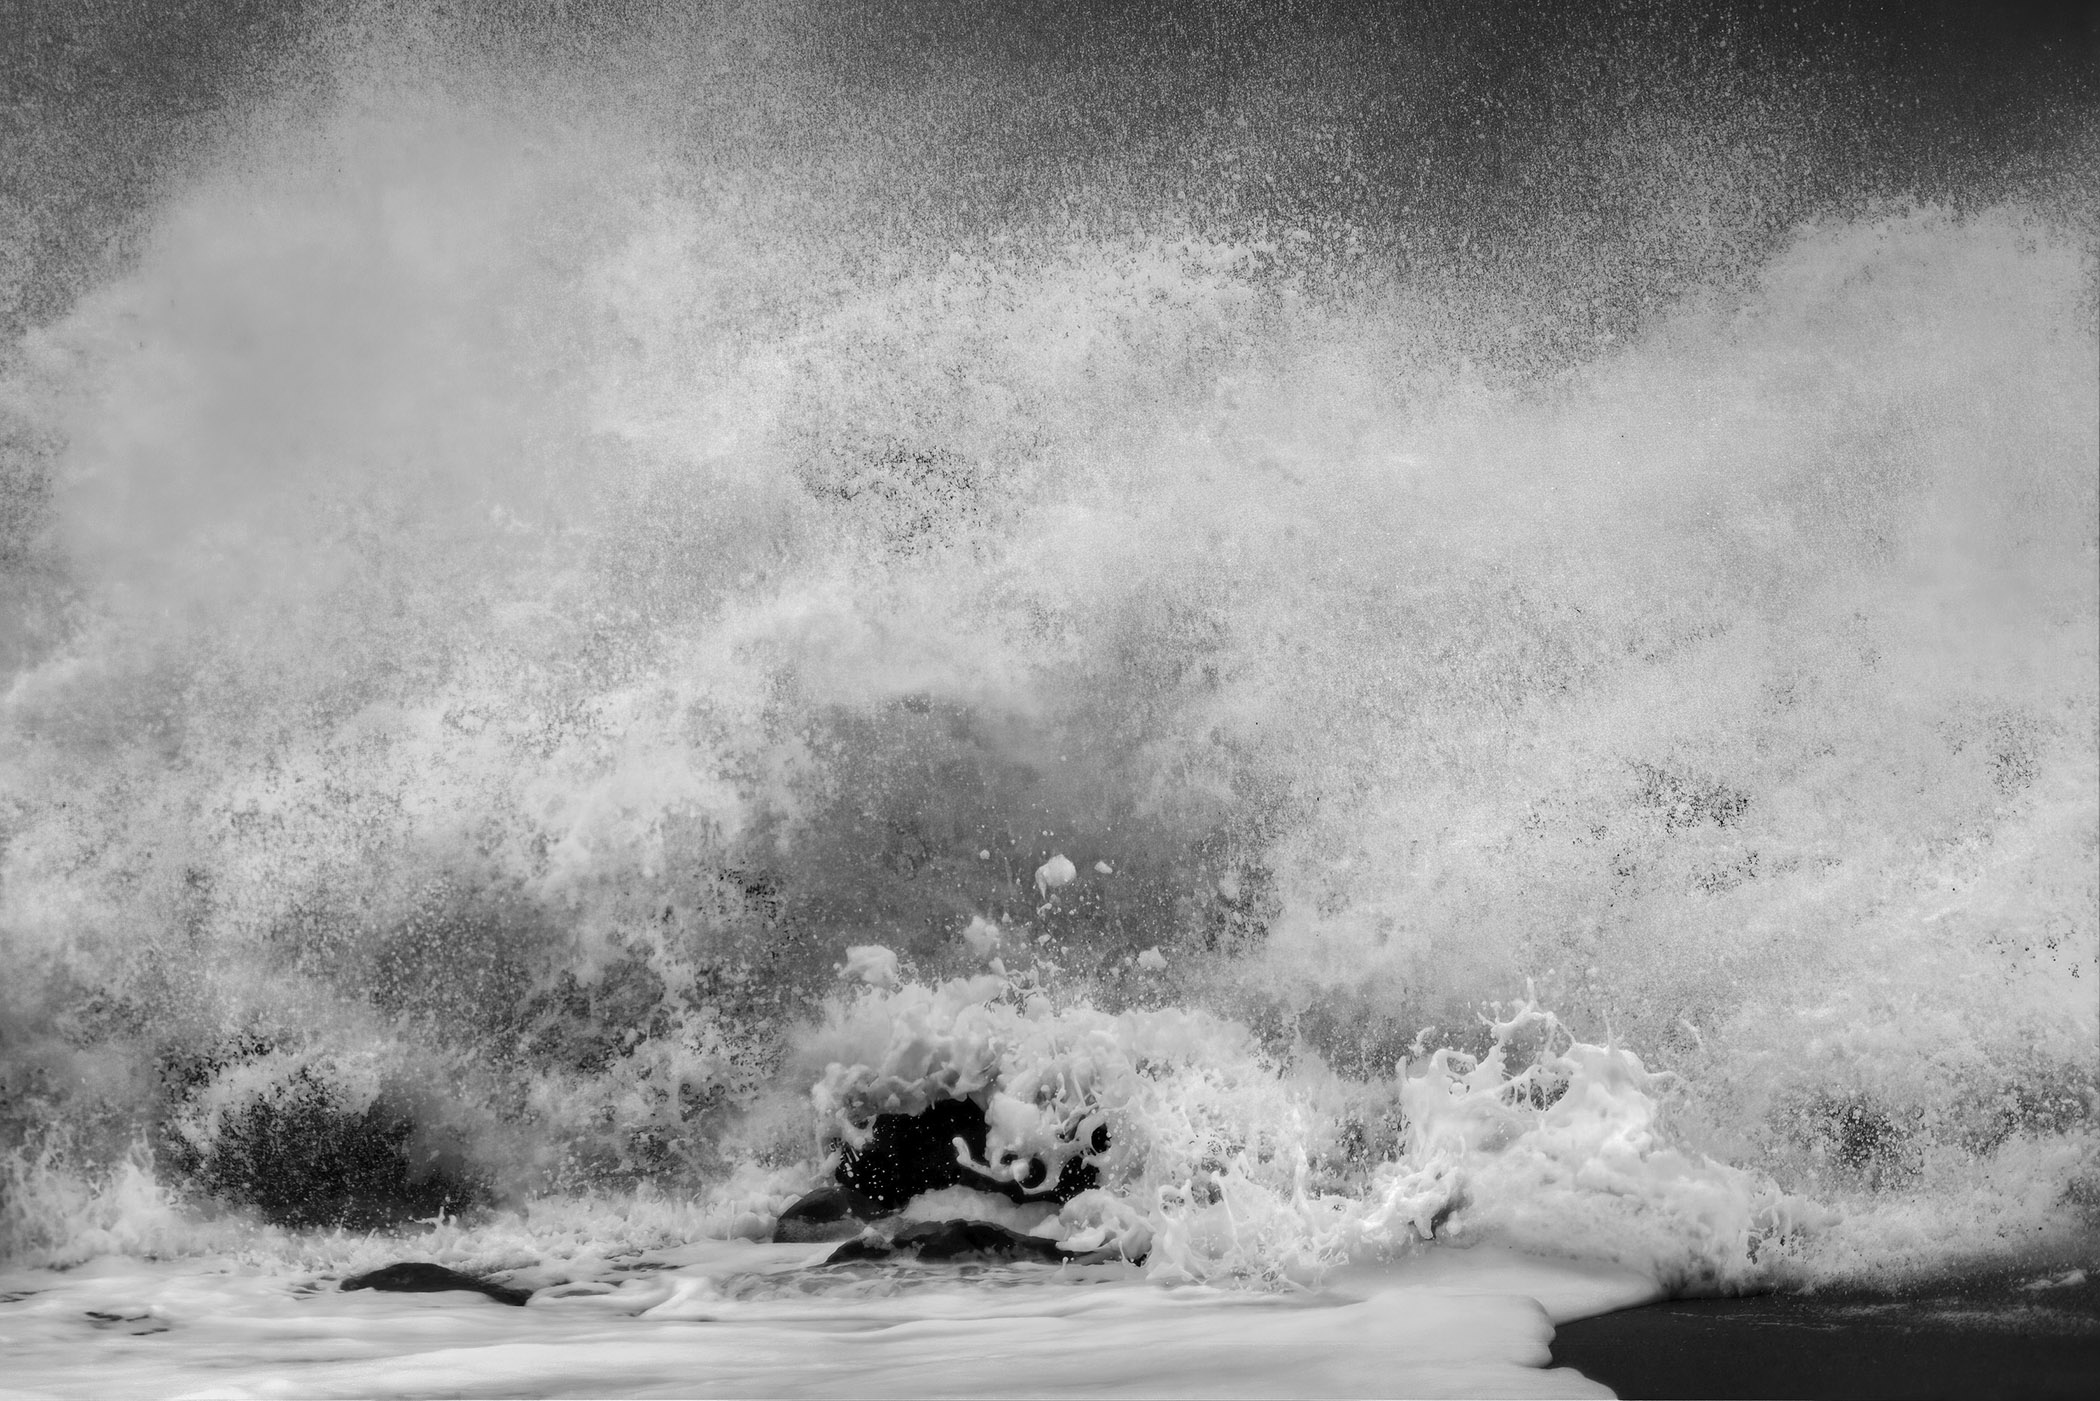 Electric-ocean-waves-storm-SandyHook-GatewayNationalRecreationArea-NewJersey